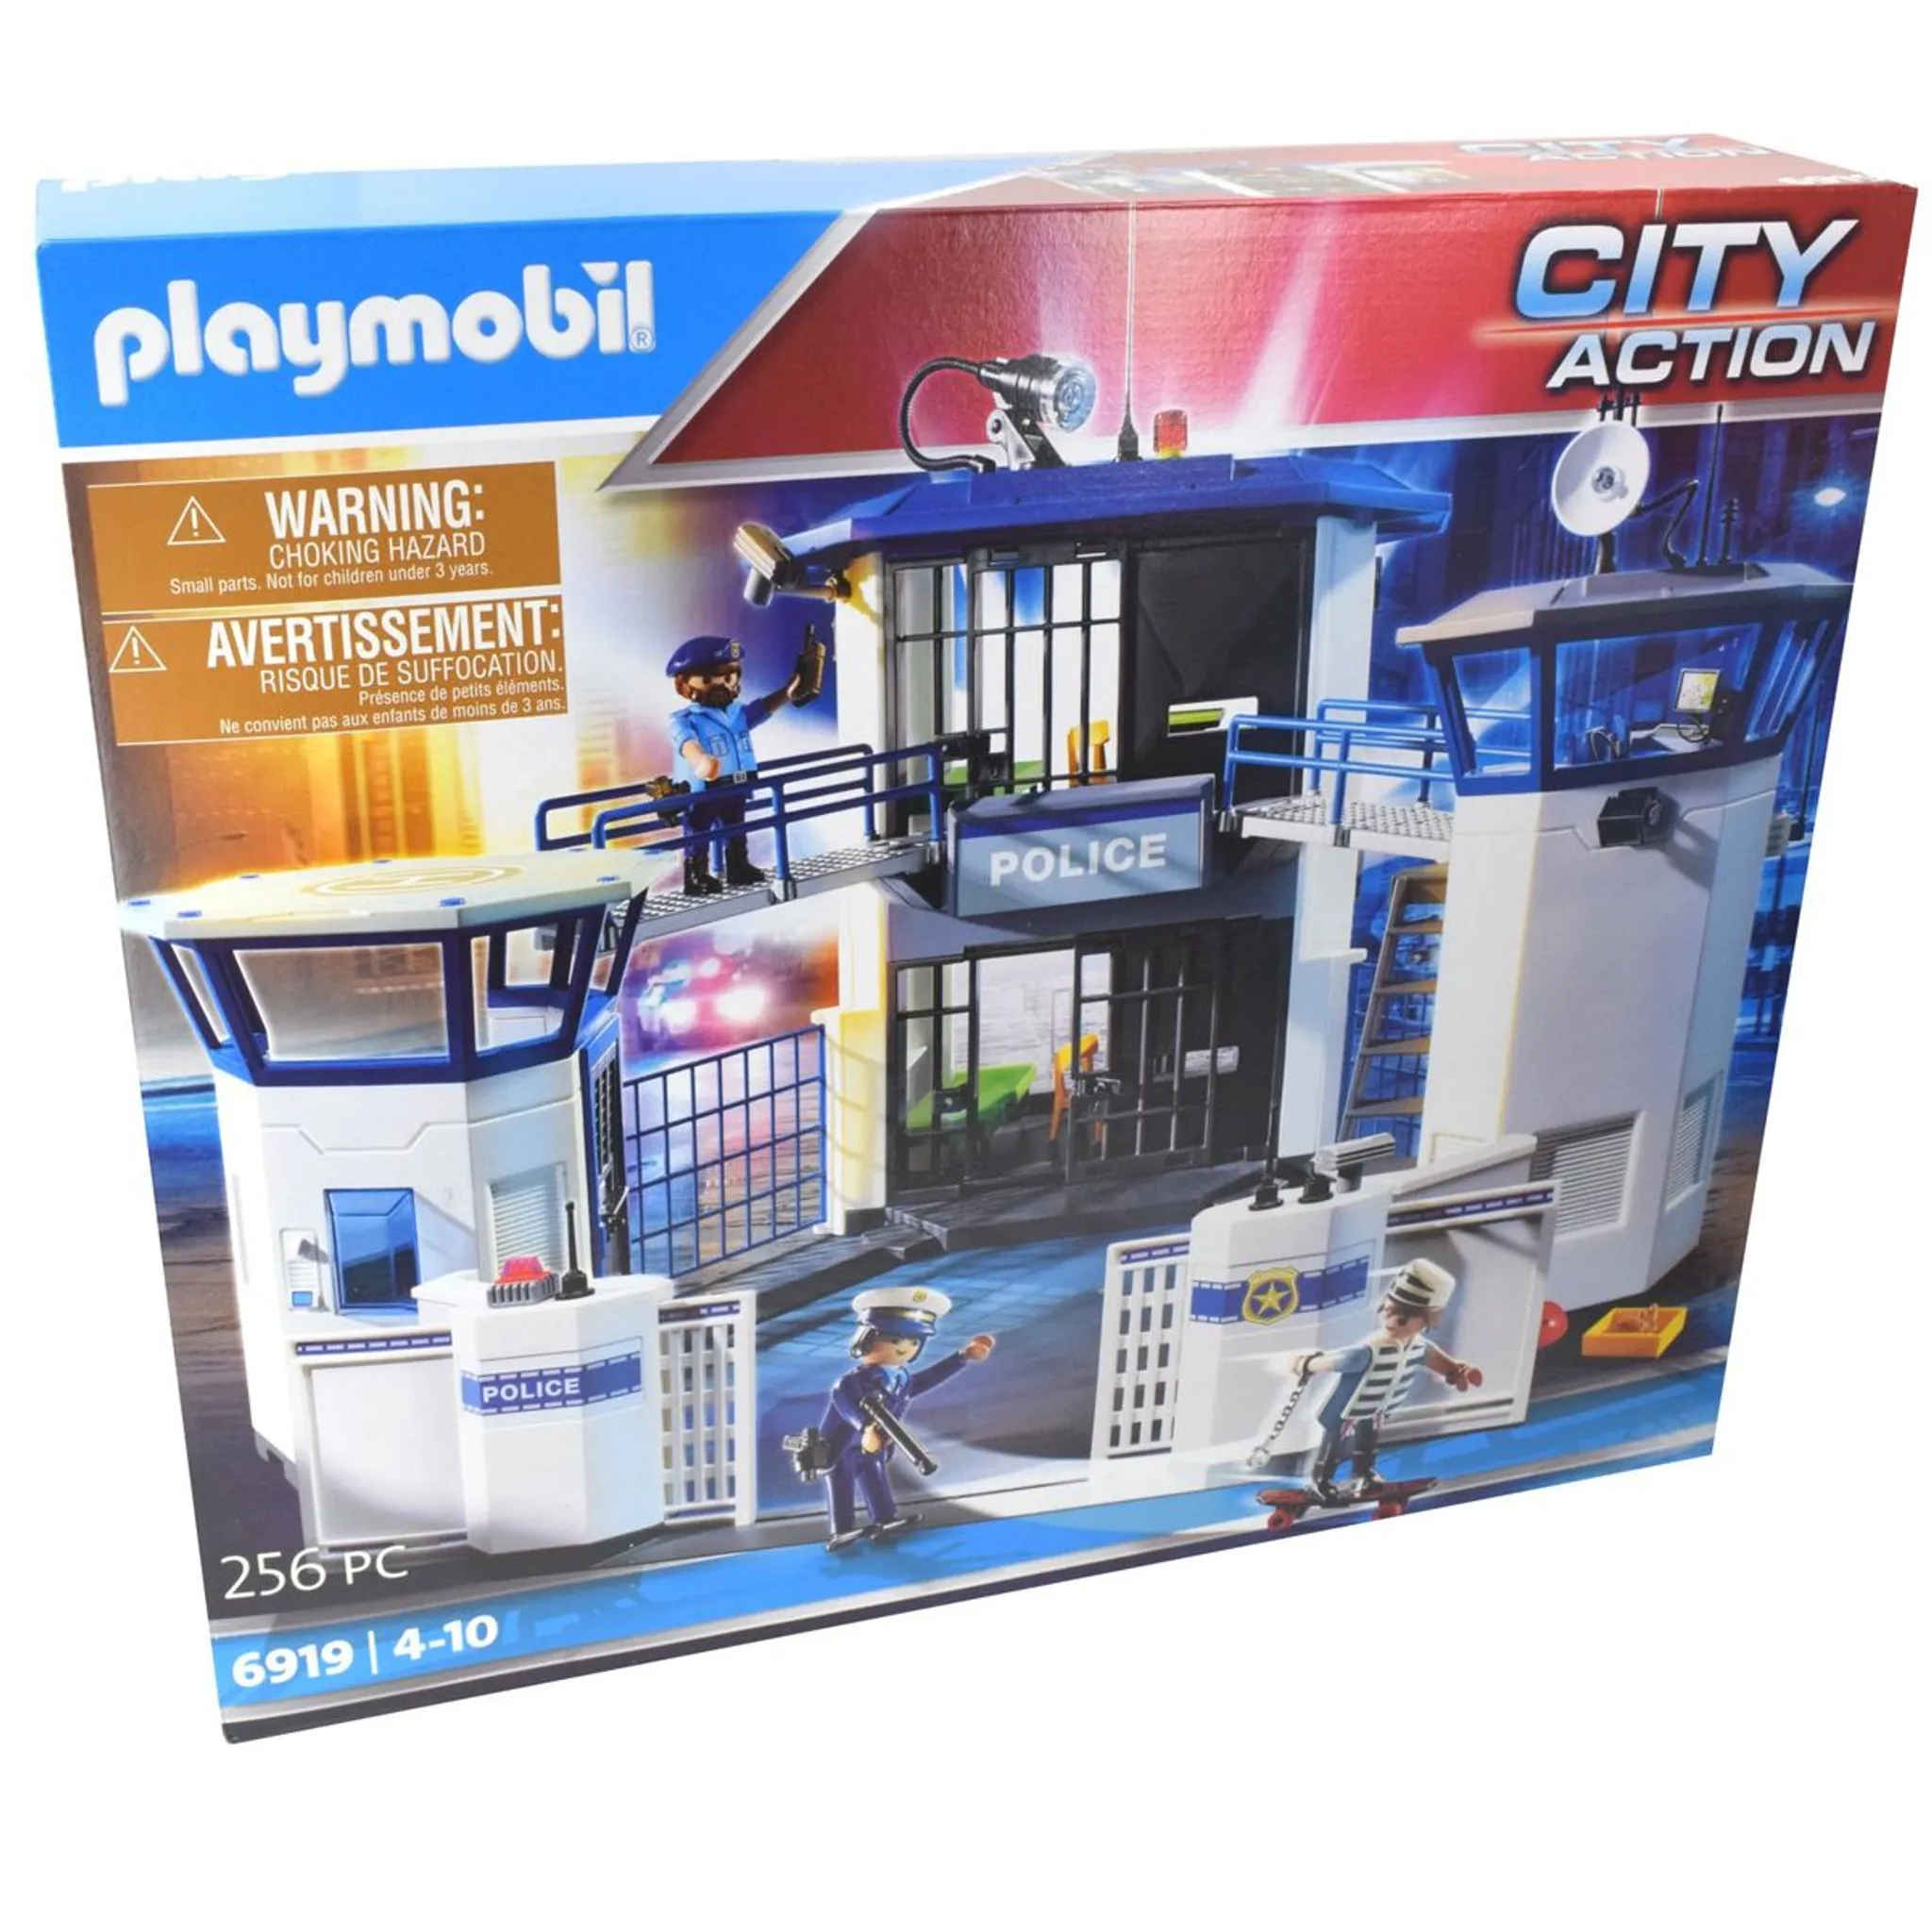 Playmobil City Action Police Van (70899) desde 33,99 €